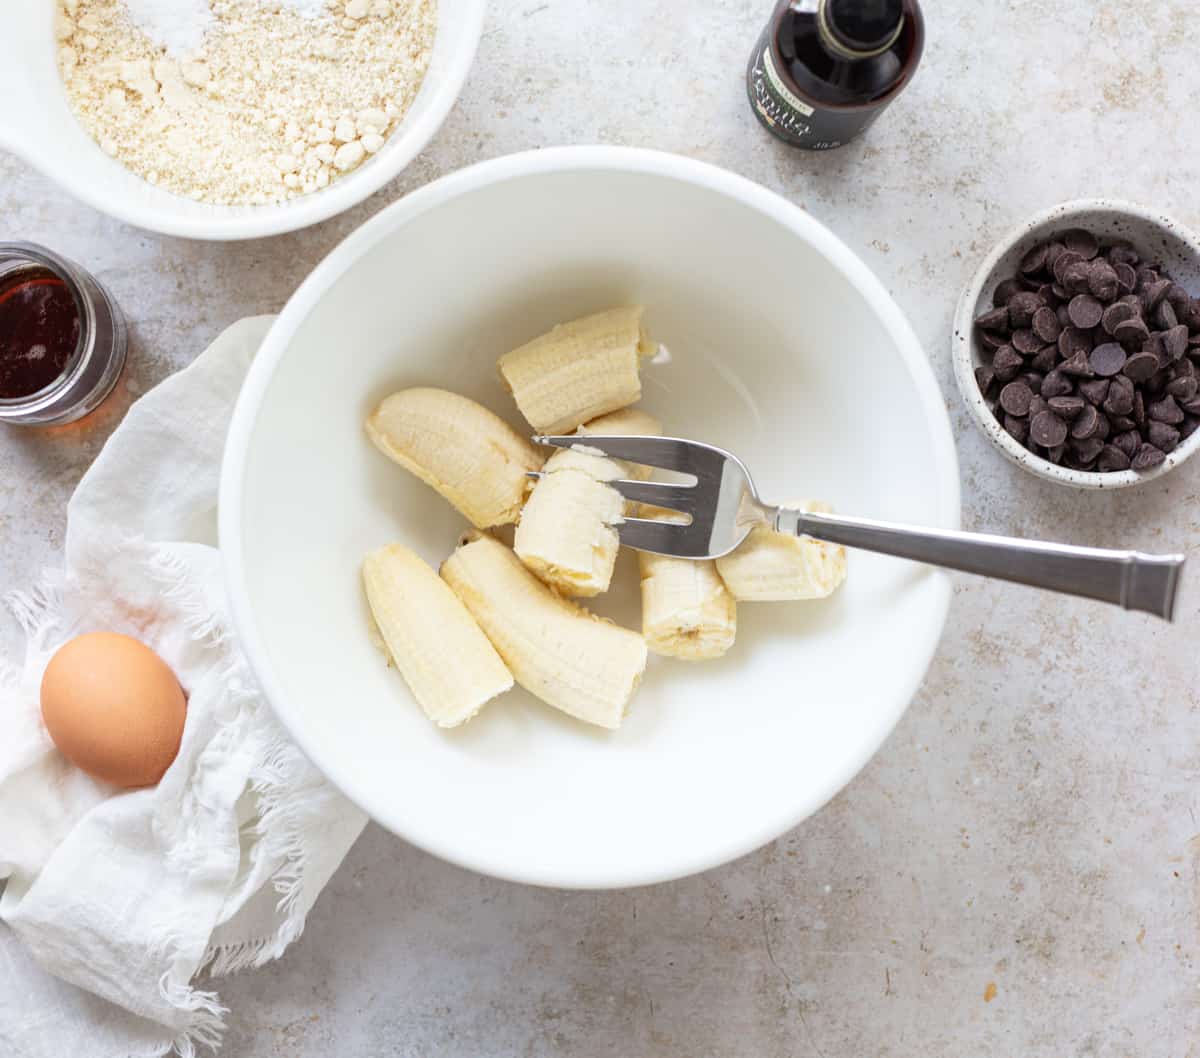 ingredients to make almond flour banana muffins